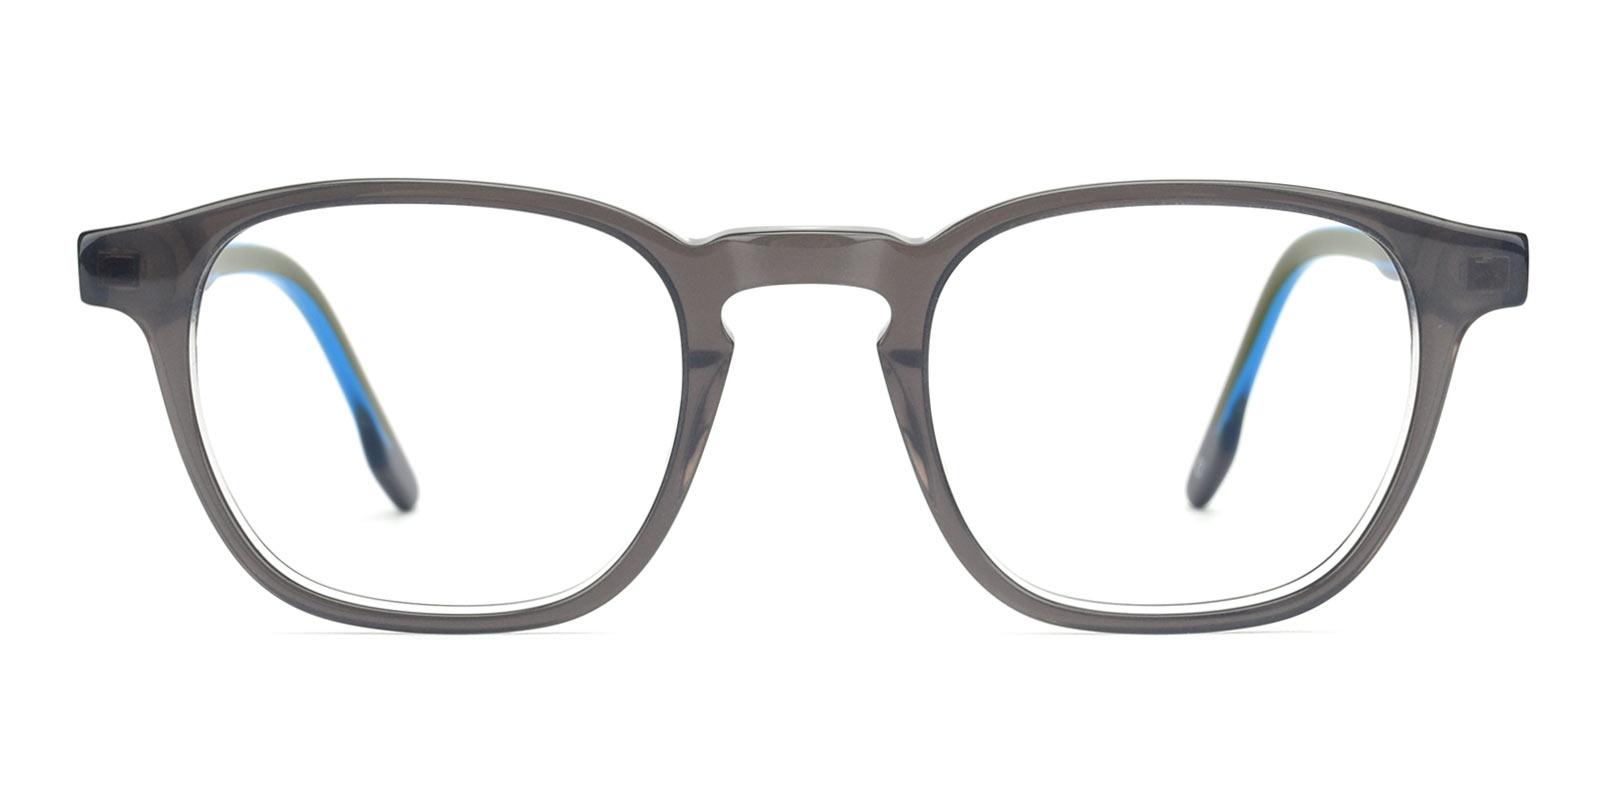 Cambridge Eyeglasses - Cheap Prescription Glasses Online